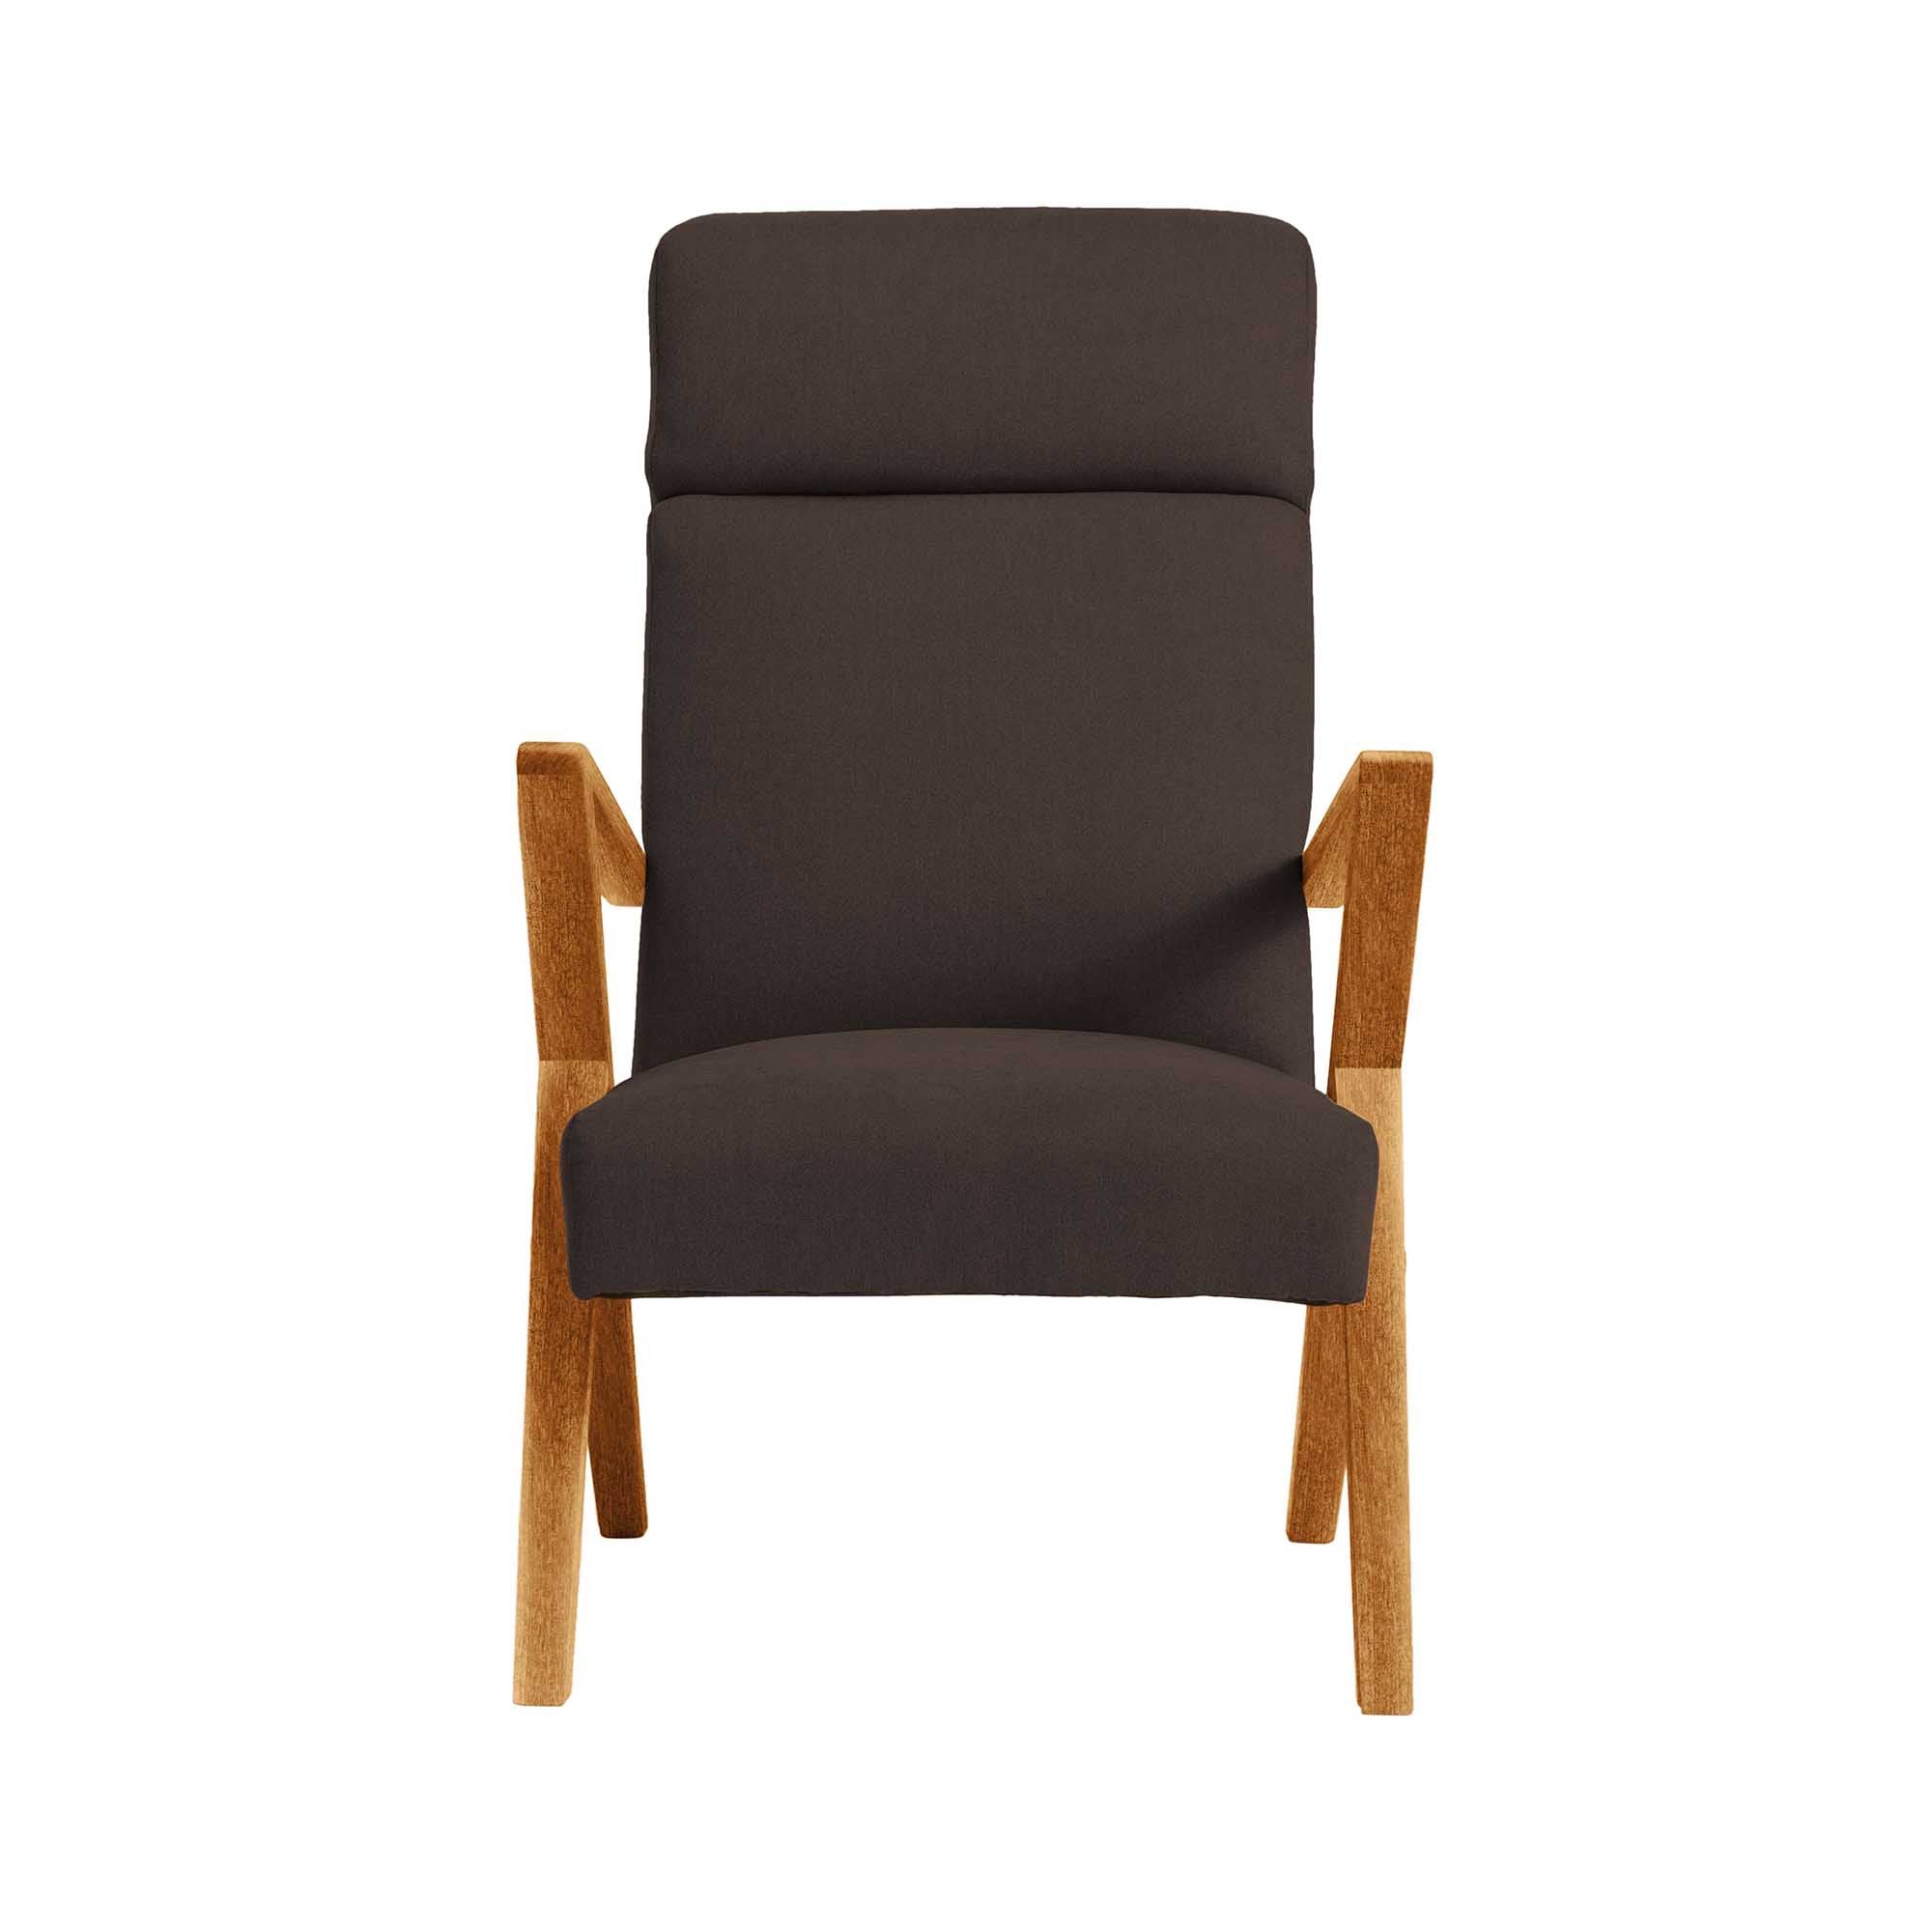 RETROSTAR Lounge Chair, Beech Wood Frame, Oak Colour brown view, front view